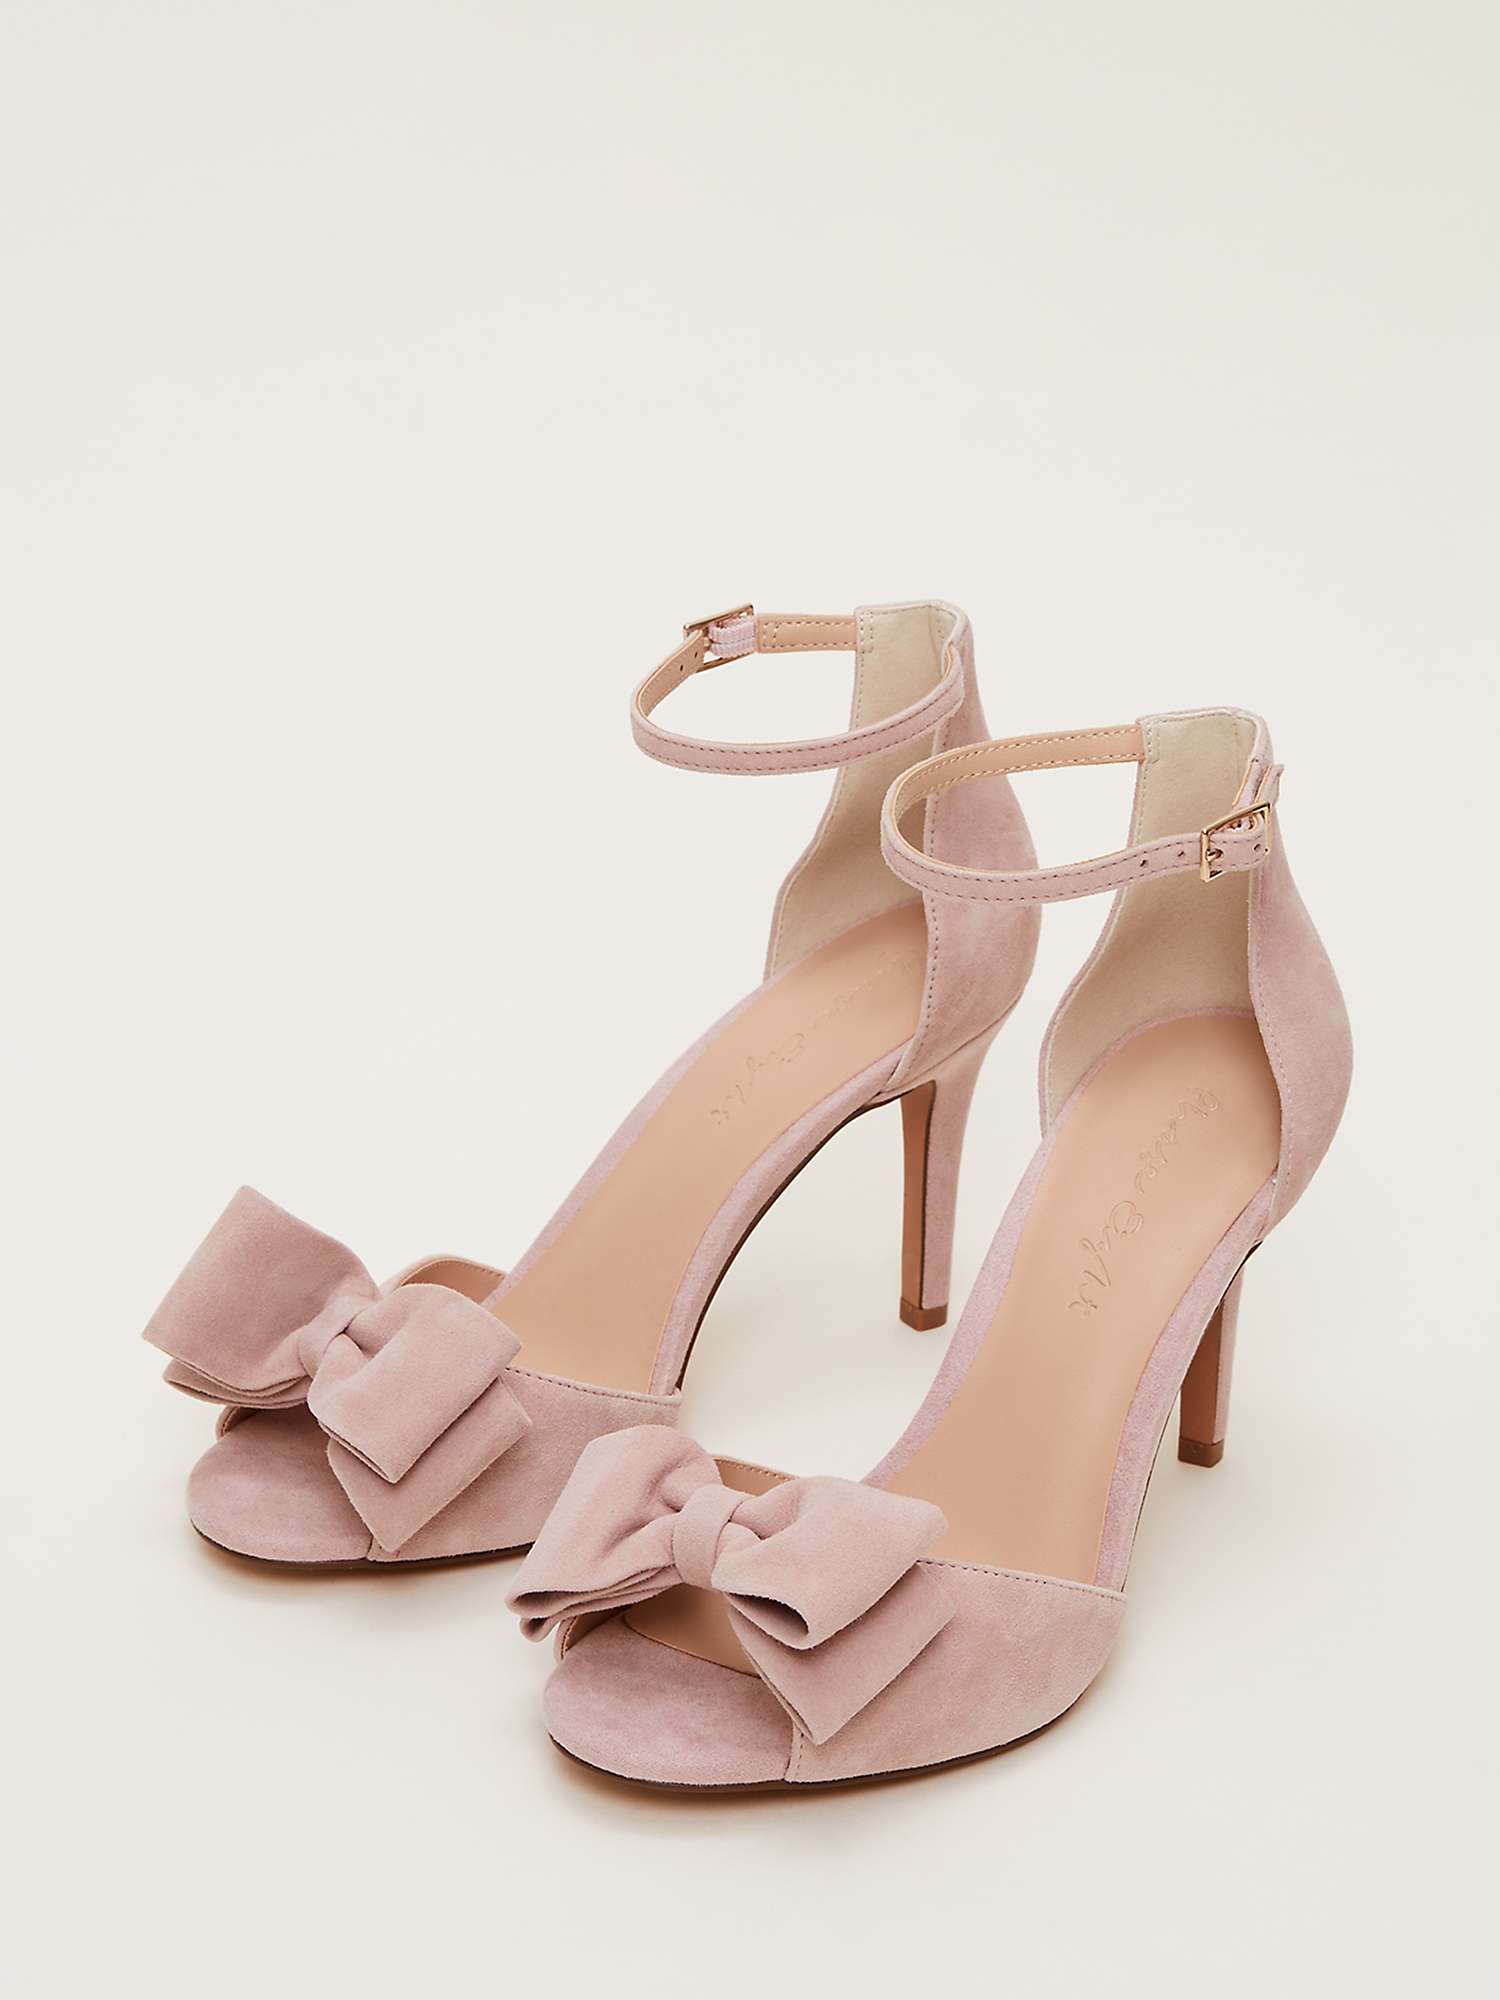 Buy Suede Bow Front High Heel Sandals, Antique Rose Online at johnlewis.com